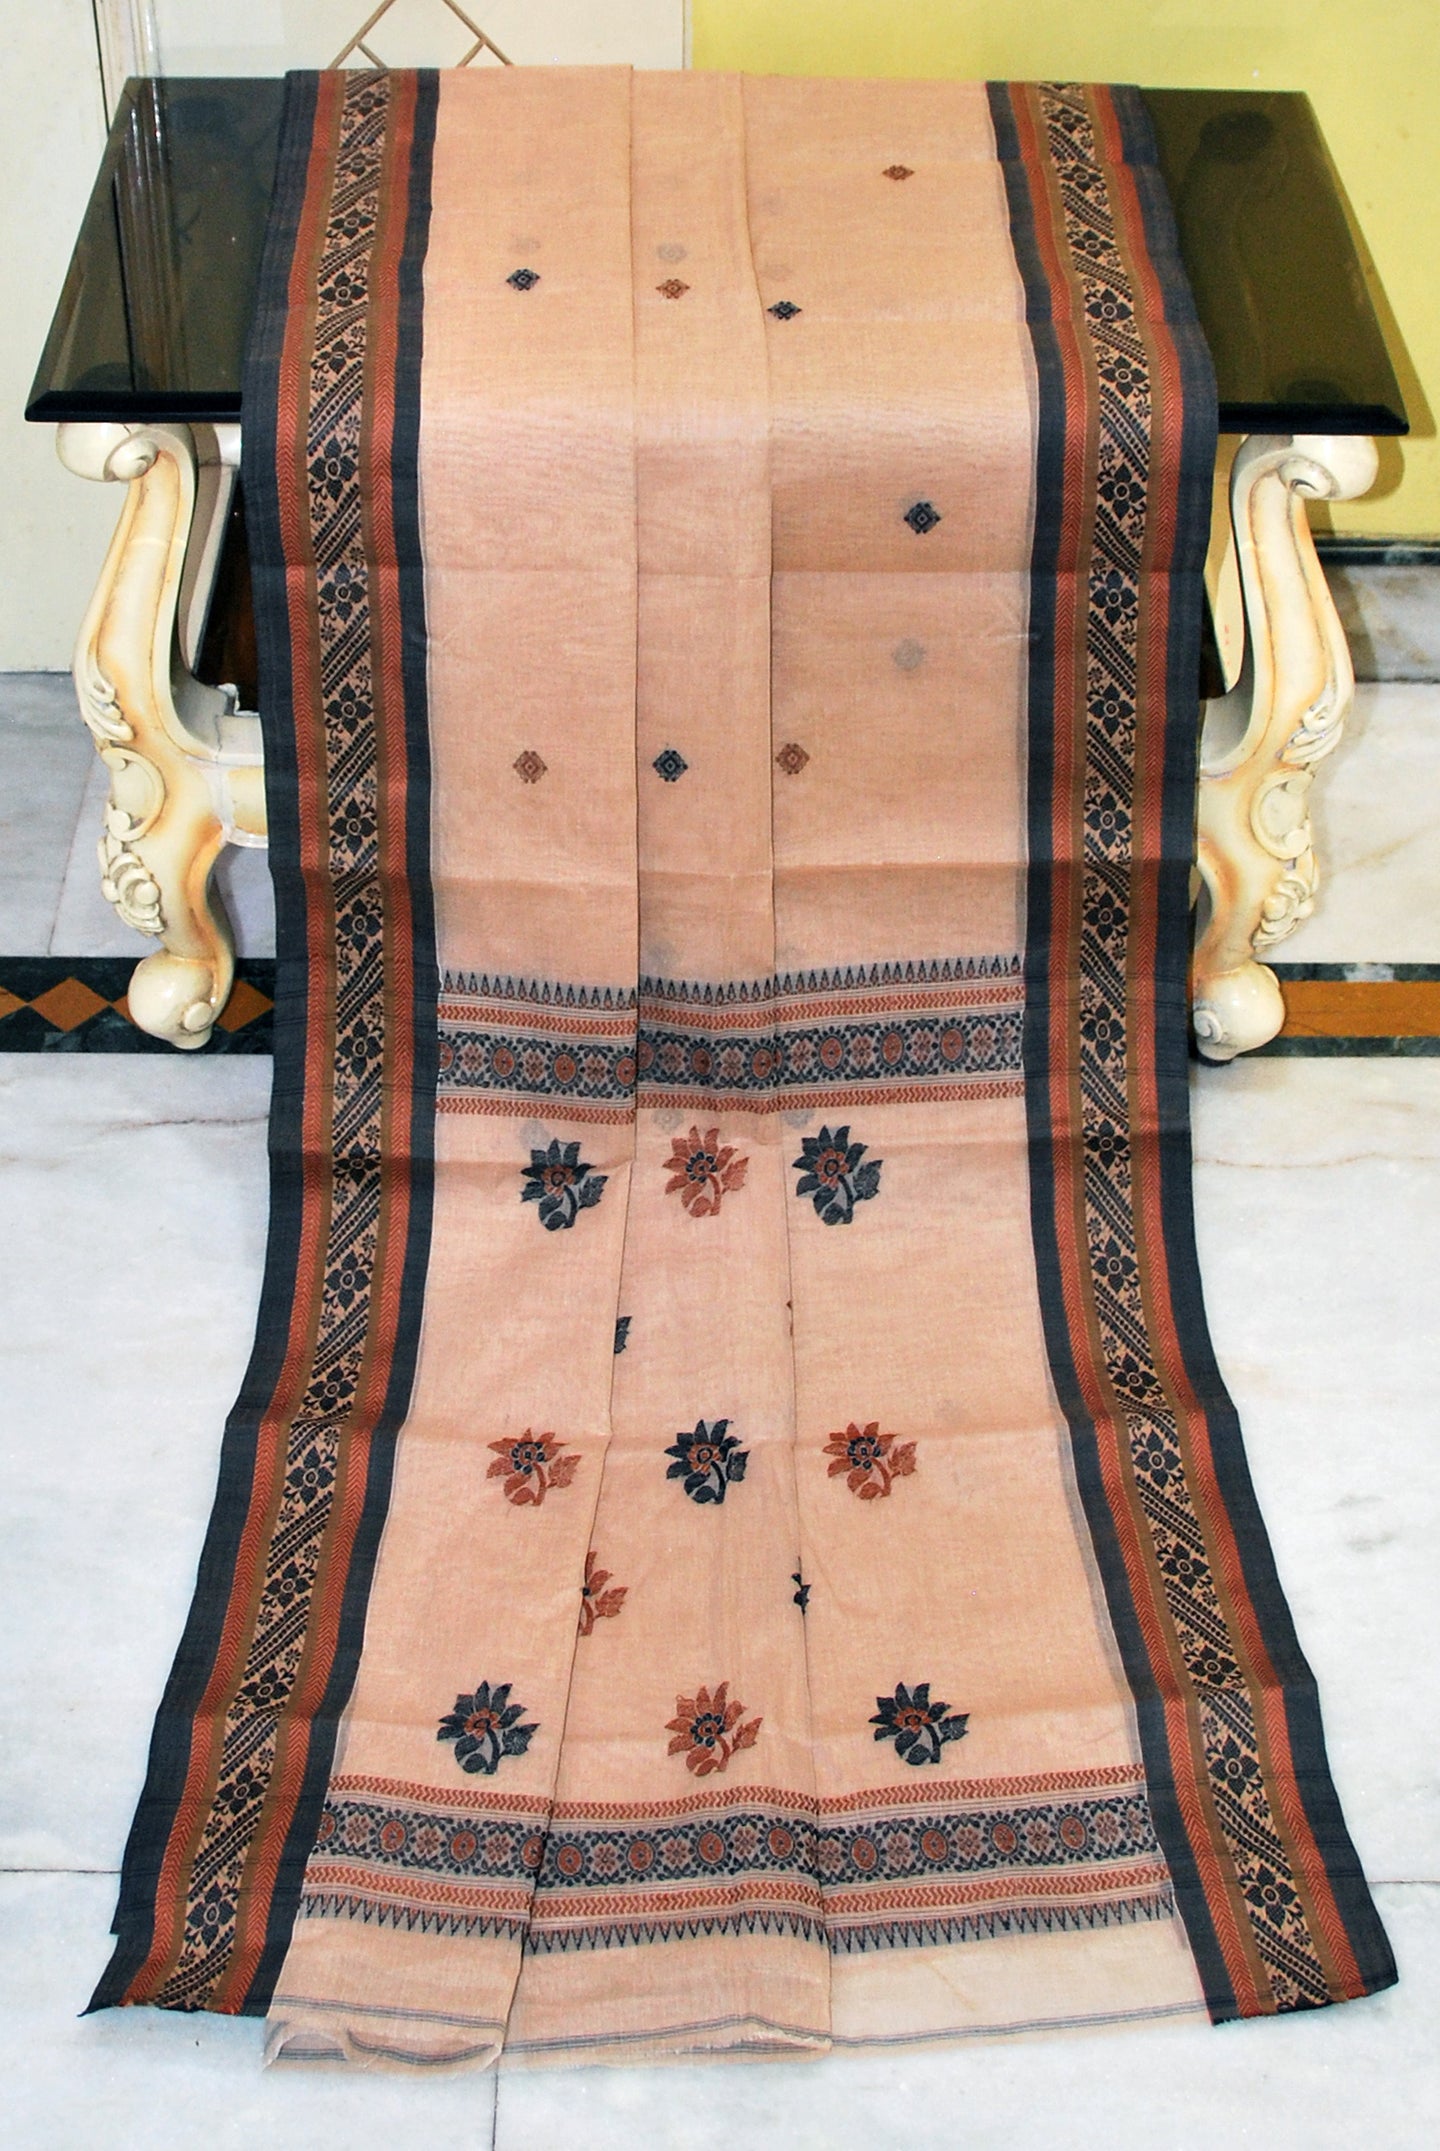 Medium Size Thread Nakshi Border Premium Quality Bengal Handloom Cotton Saree in Desert Sand , Brown and Black